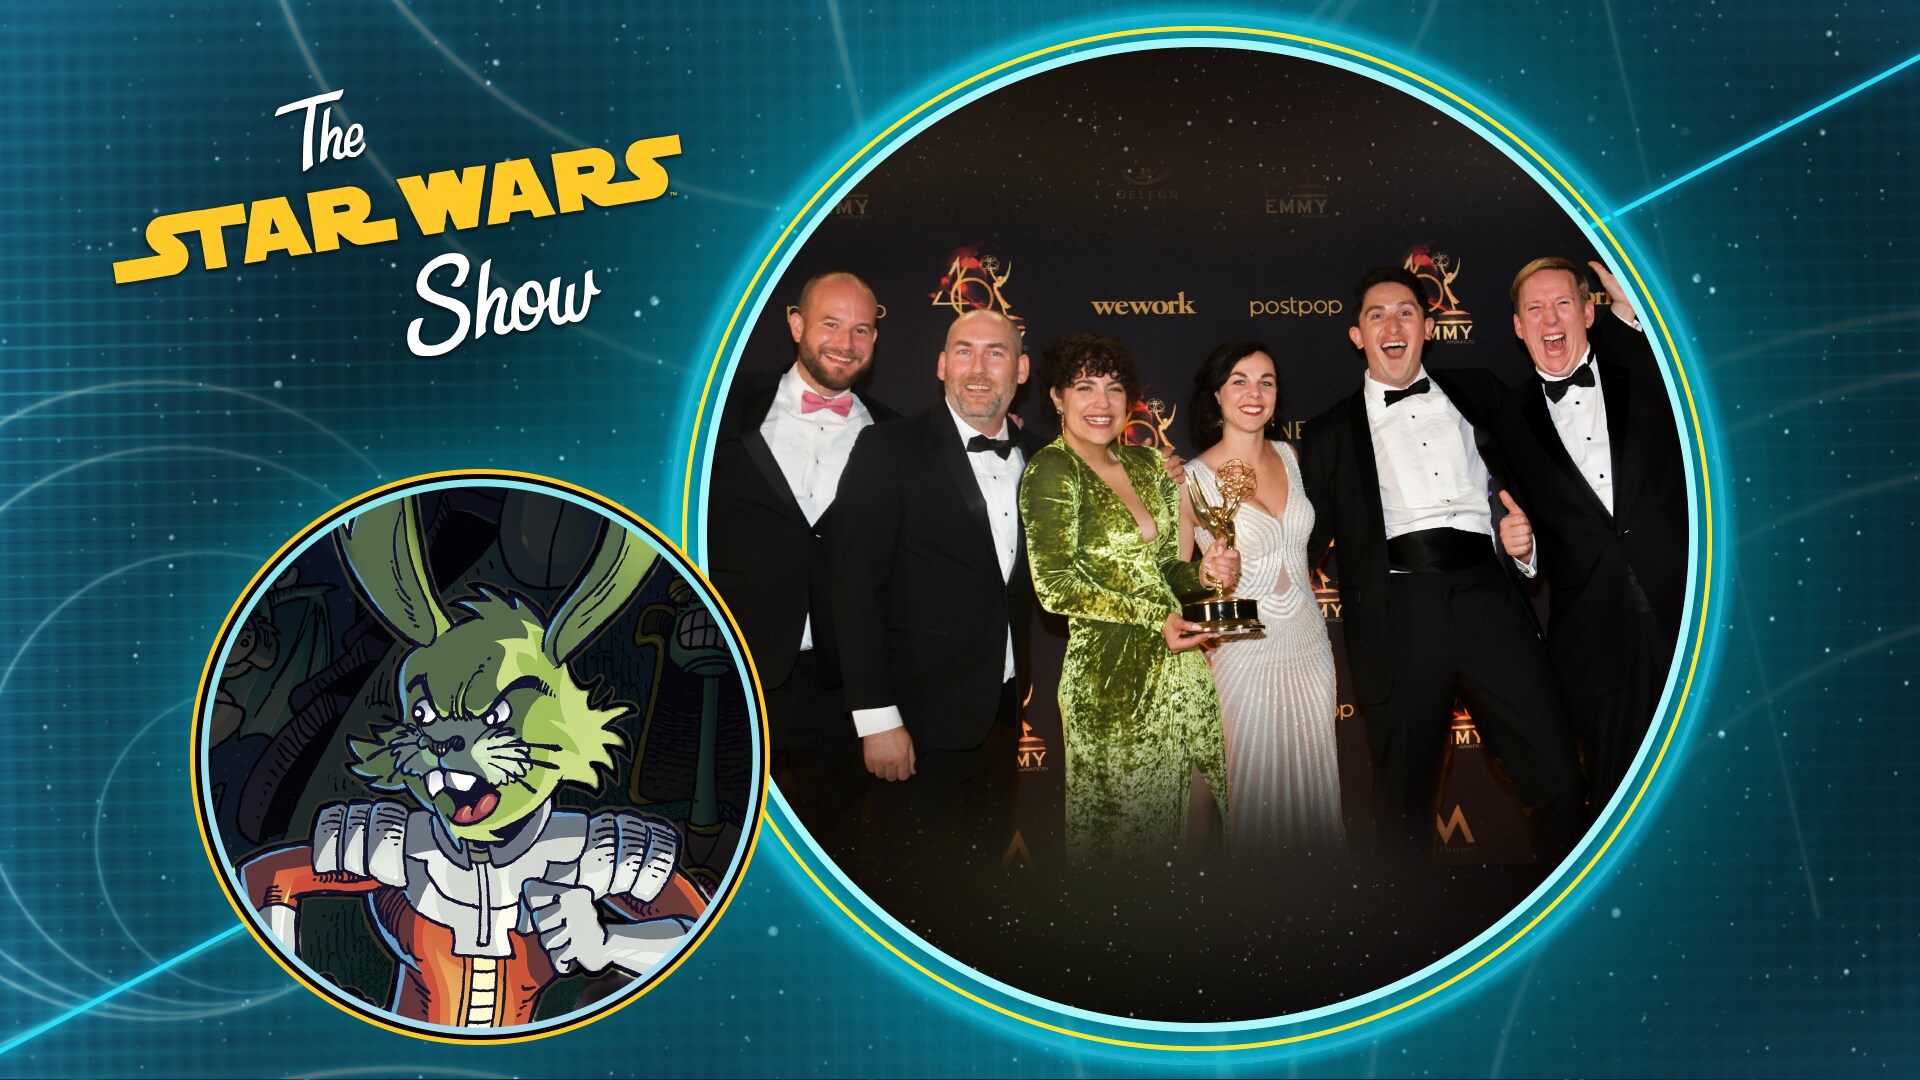 Star Wars Dates Announced, Plus We Won an Emmy!